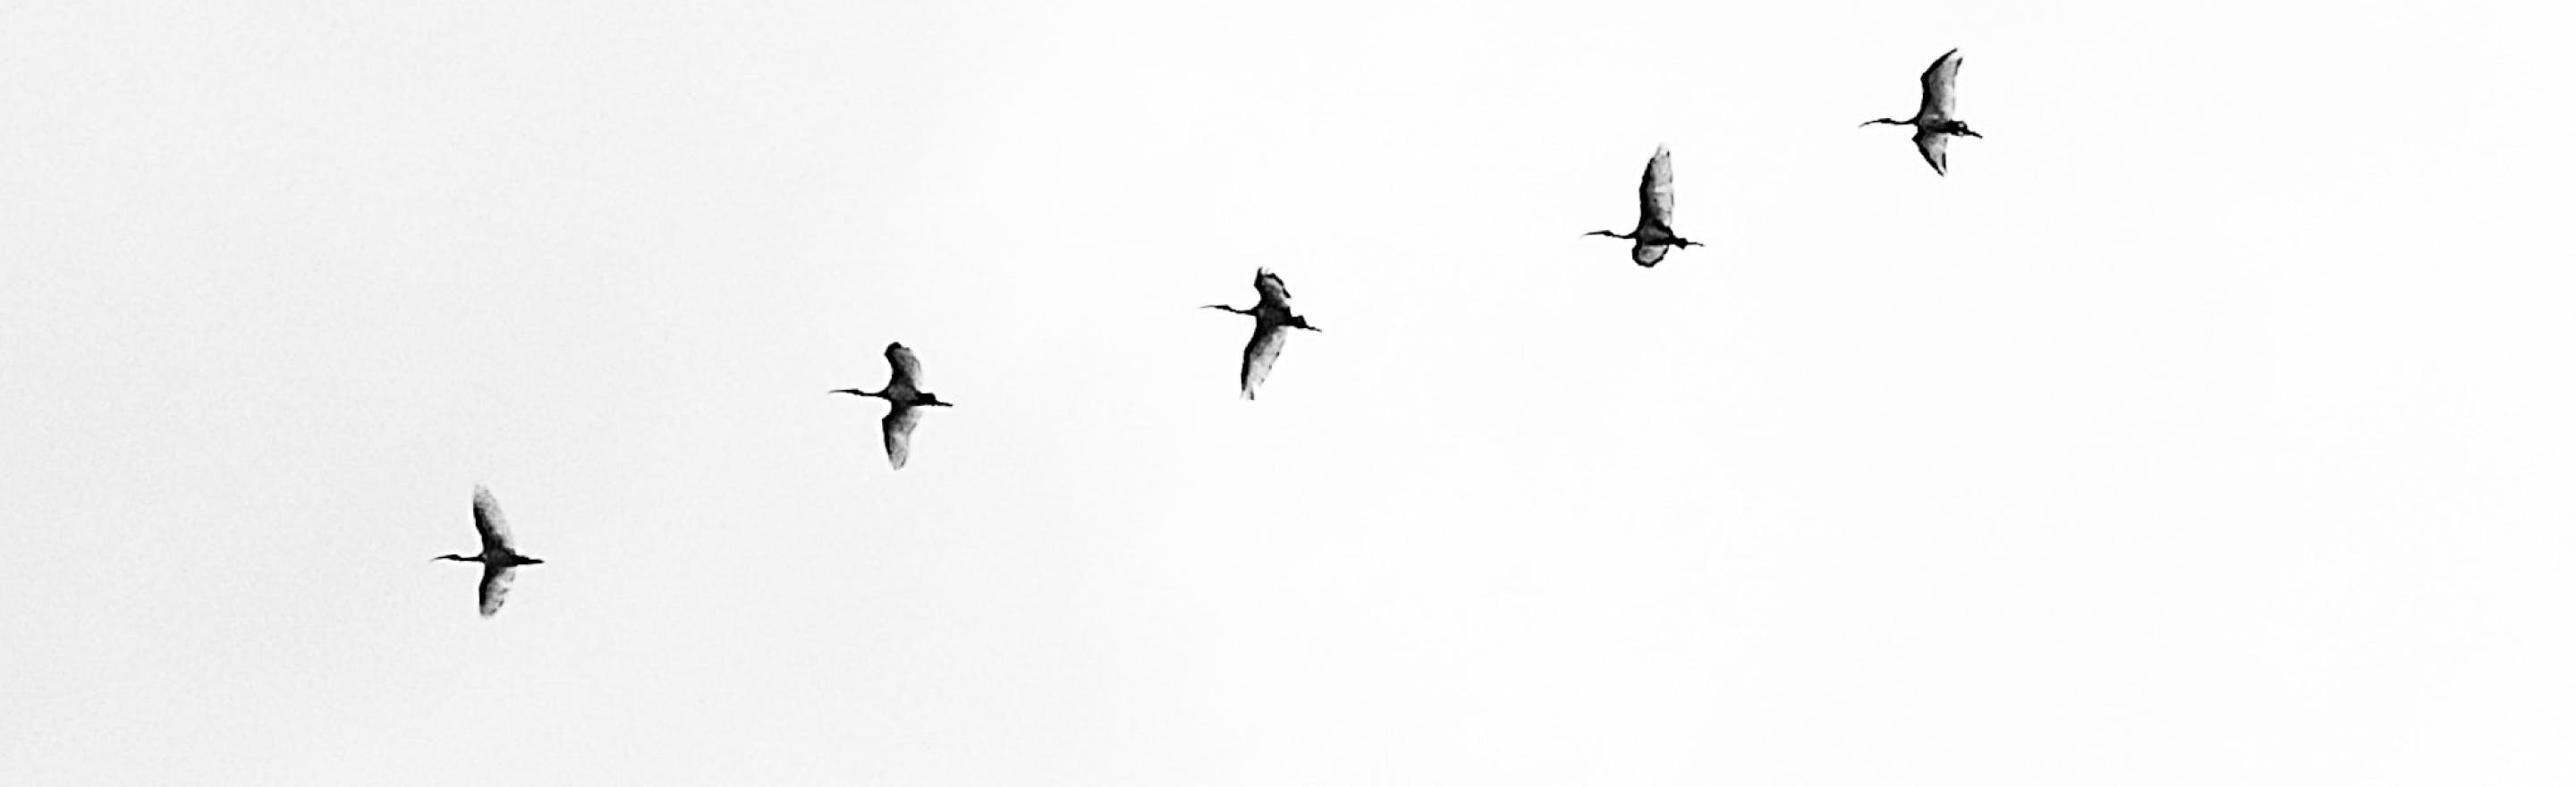 foto de aves volando